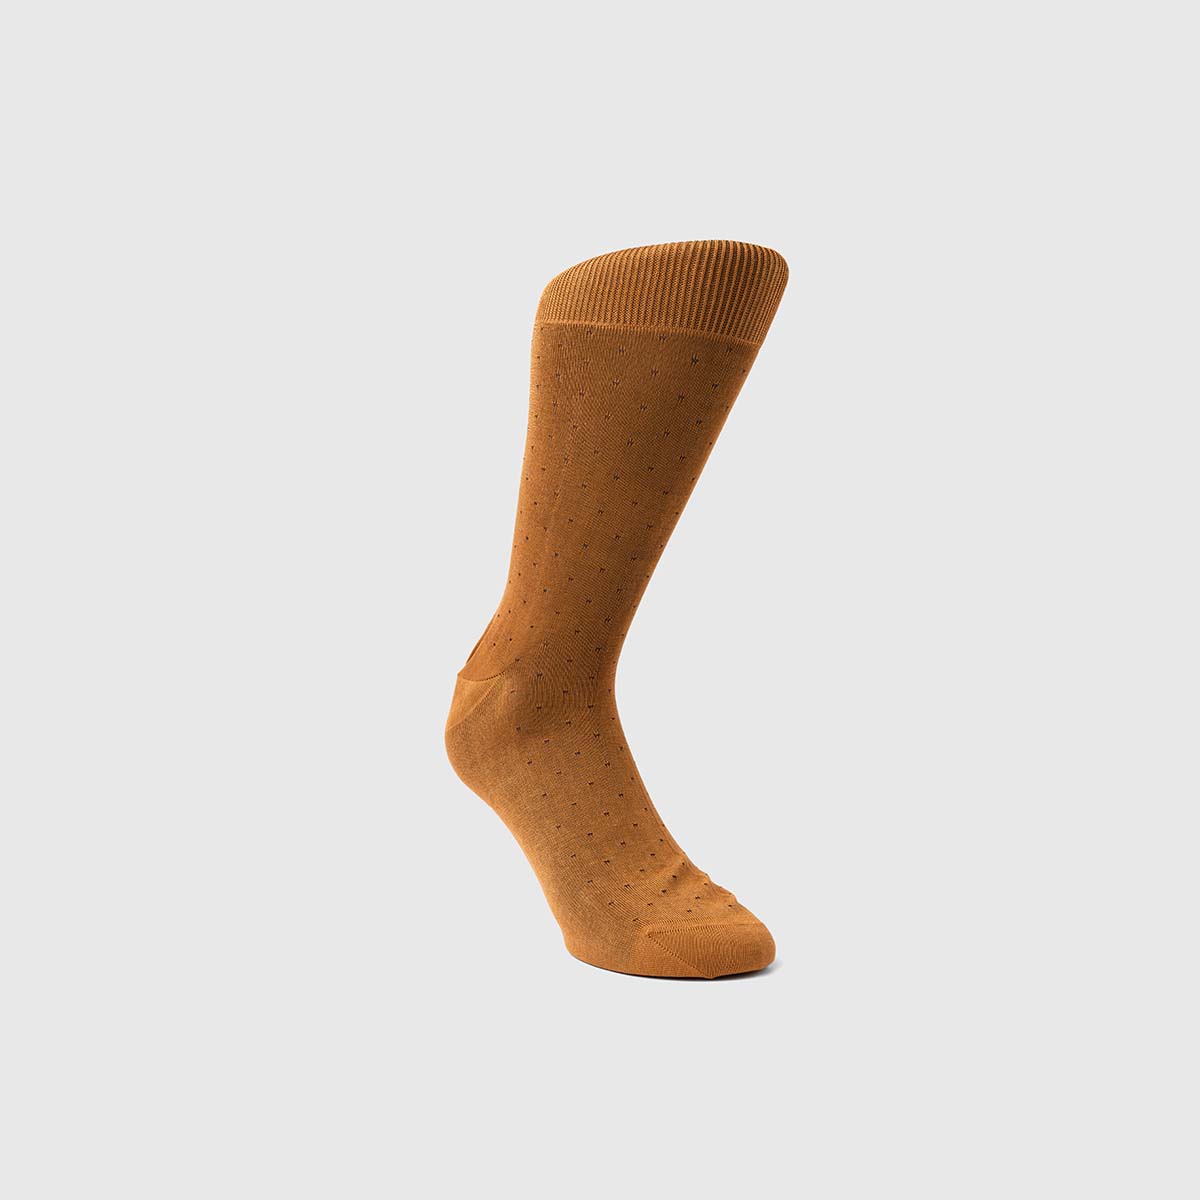 Bresciani 1970 Cotton Socks in Mustard – L